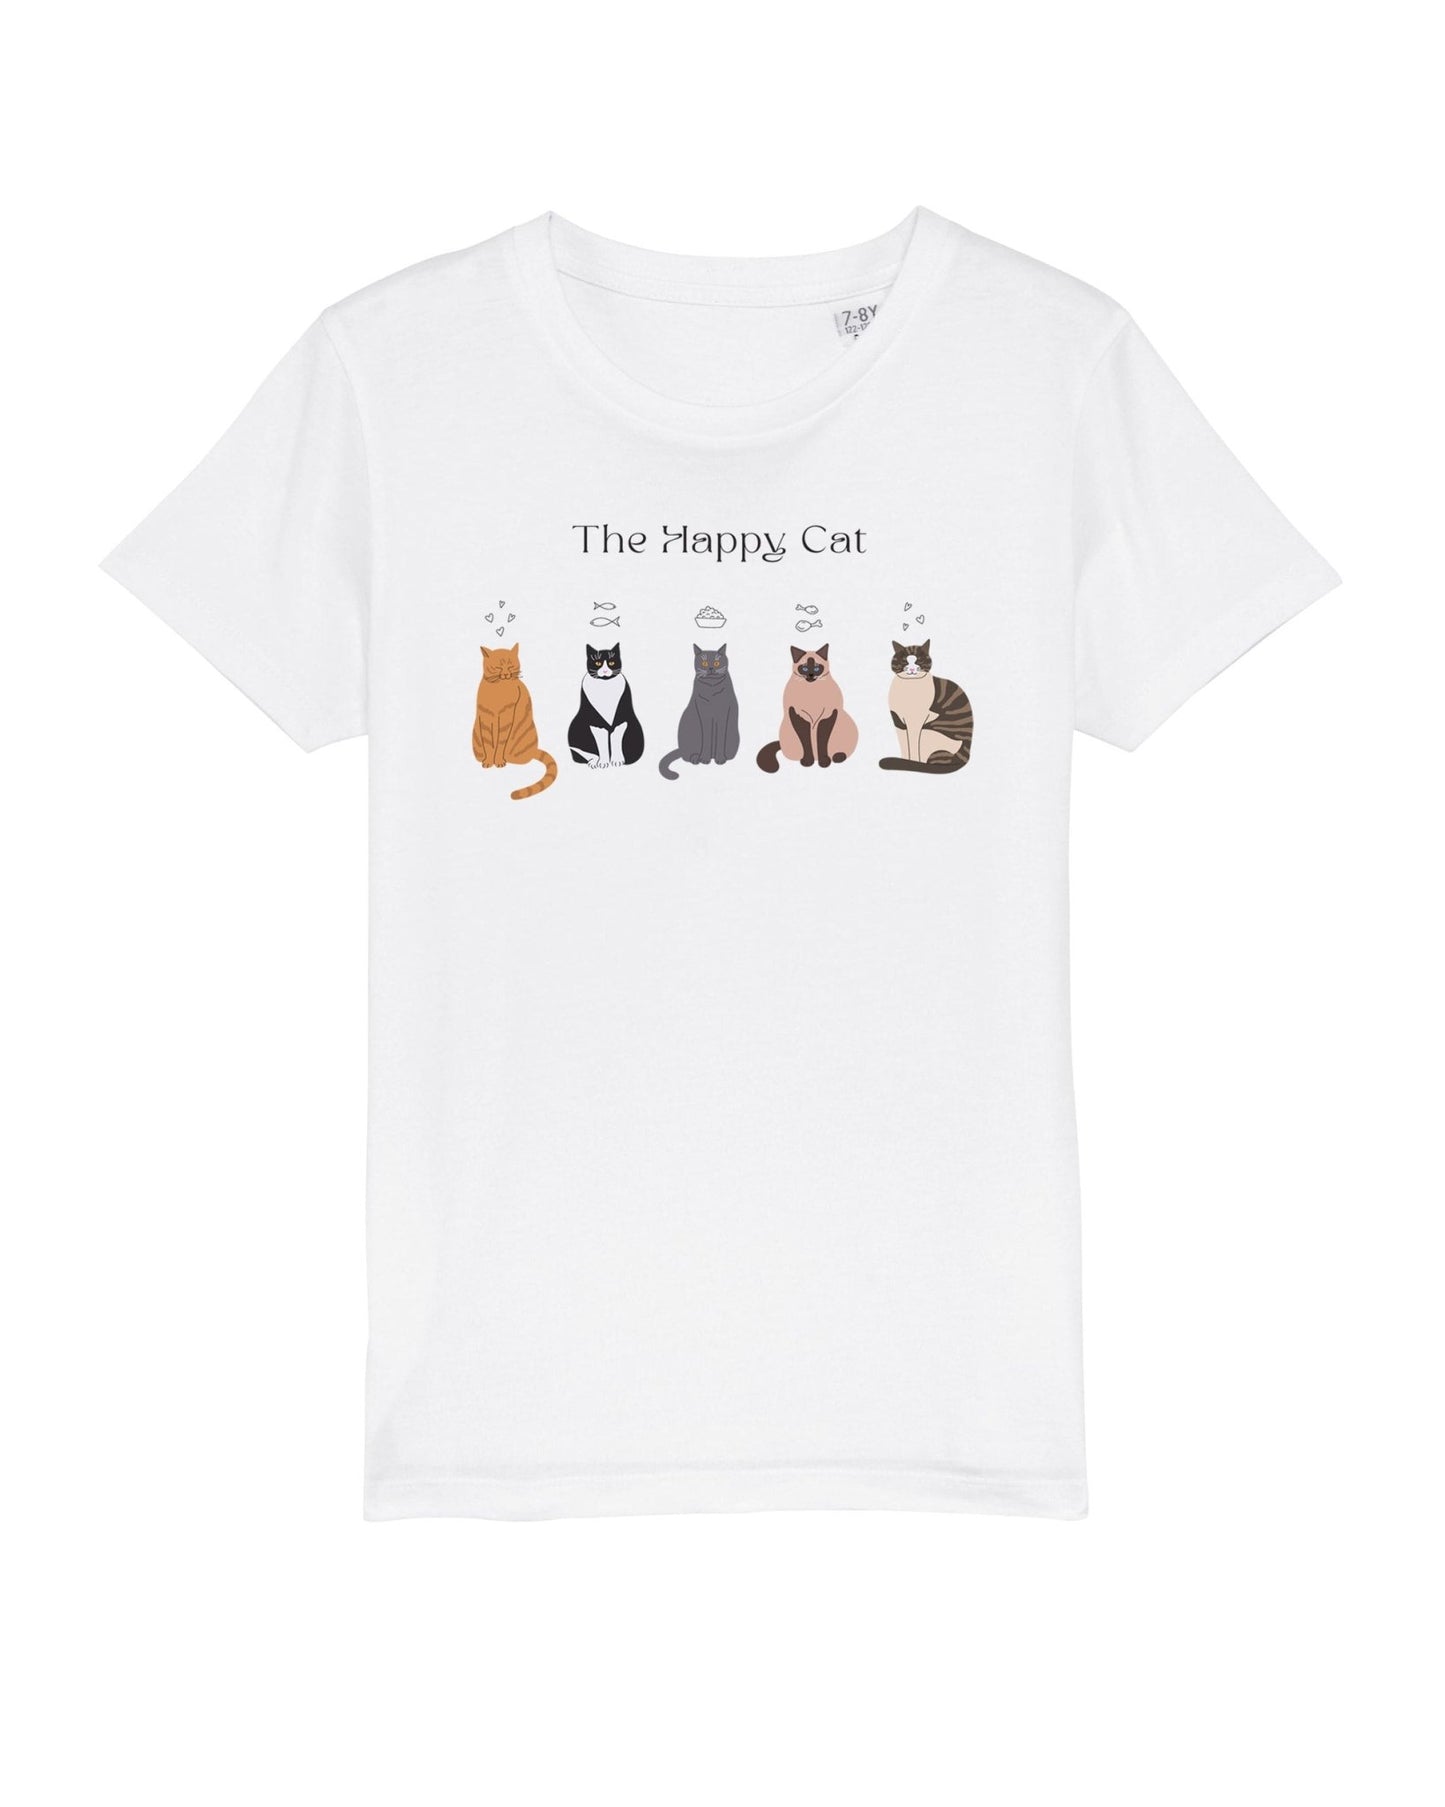 Organic Cotton 'The Happy Cat' Kids Funny Cat T-shirt - Funny Animal Shirt